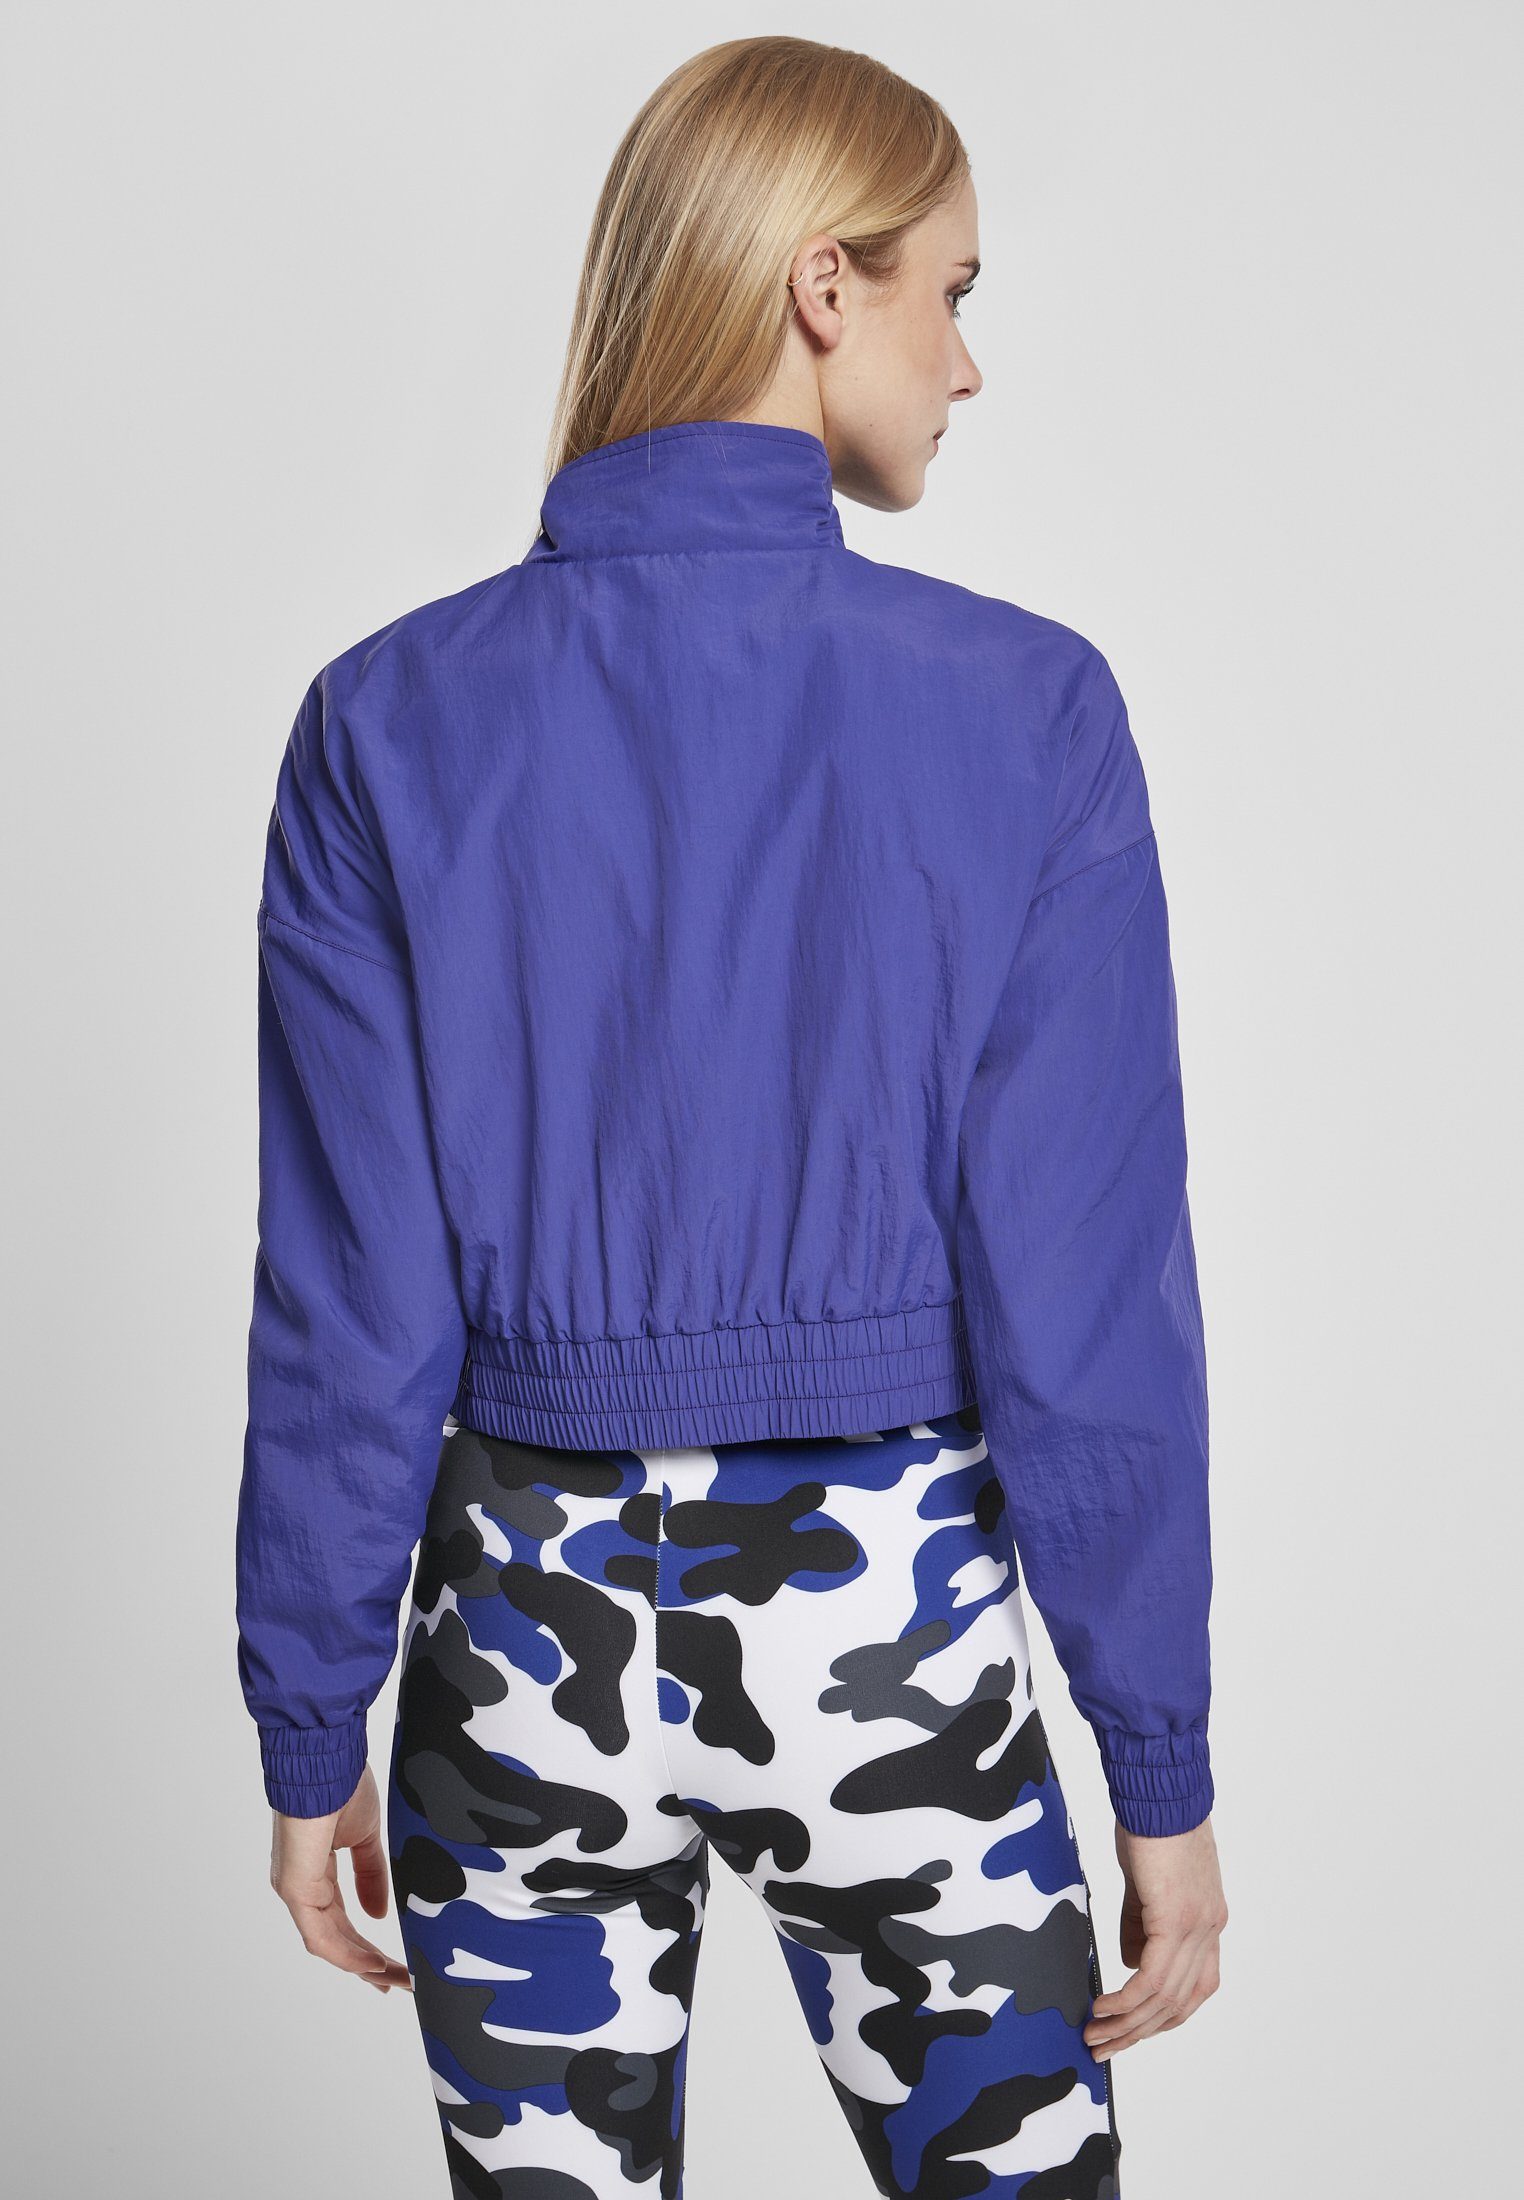 Over Nylon Jacket URBAN Frauen (1-St) bluepurple Pull Cropped Outdoorjacke CLASSICS Ladies Crinkle